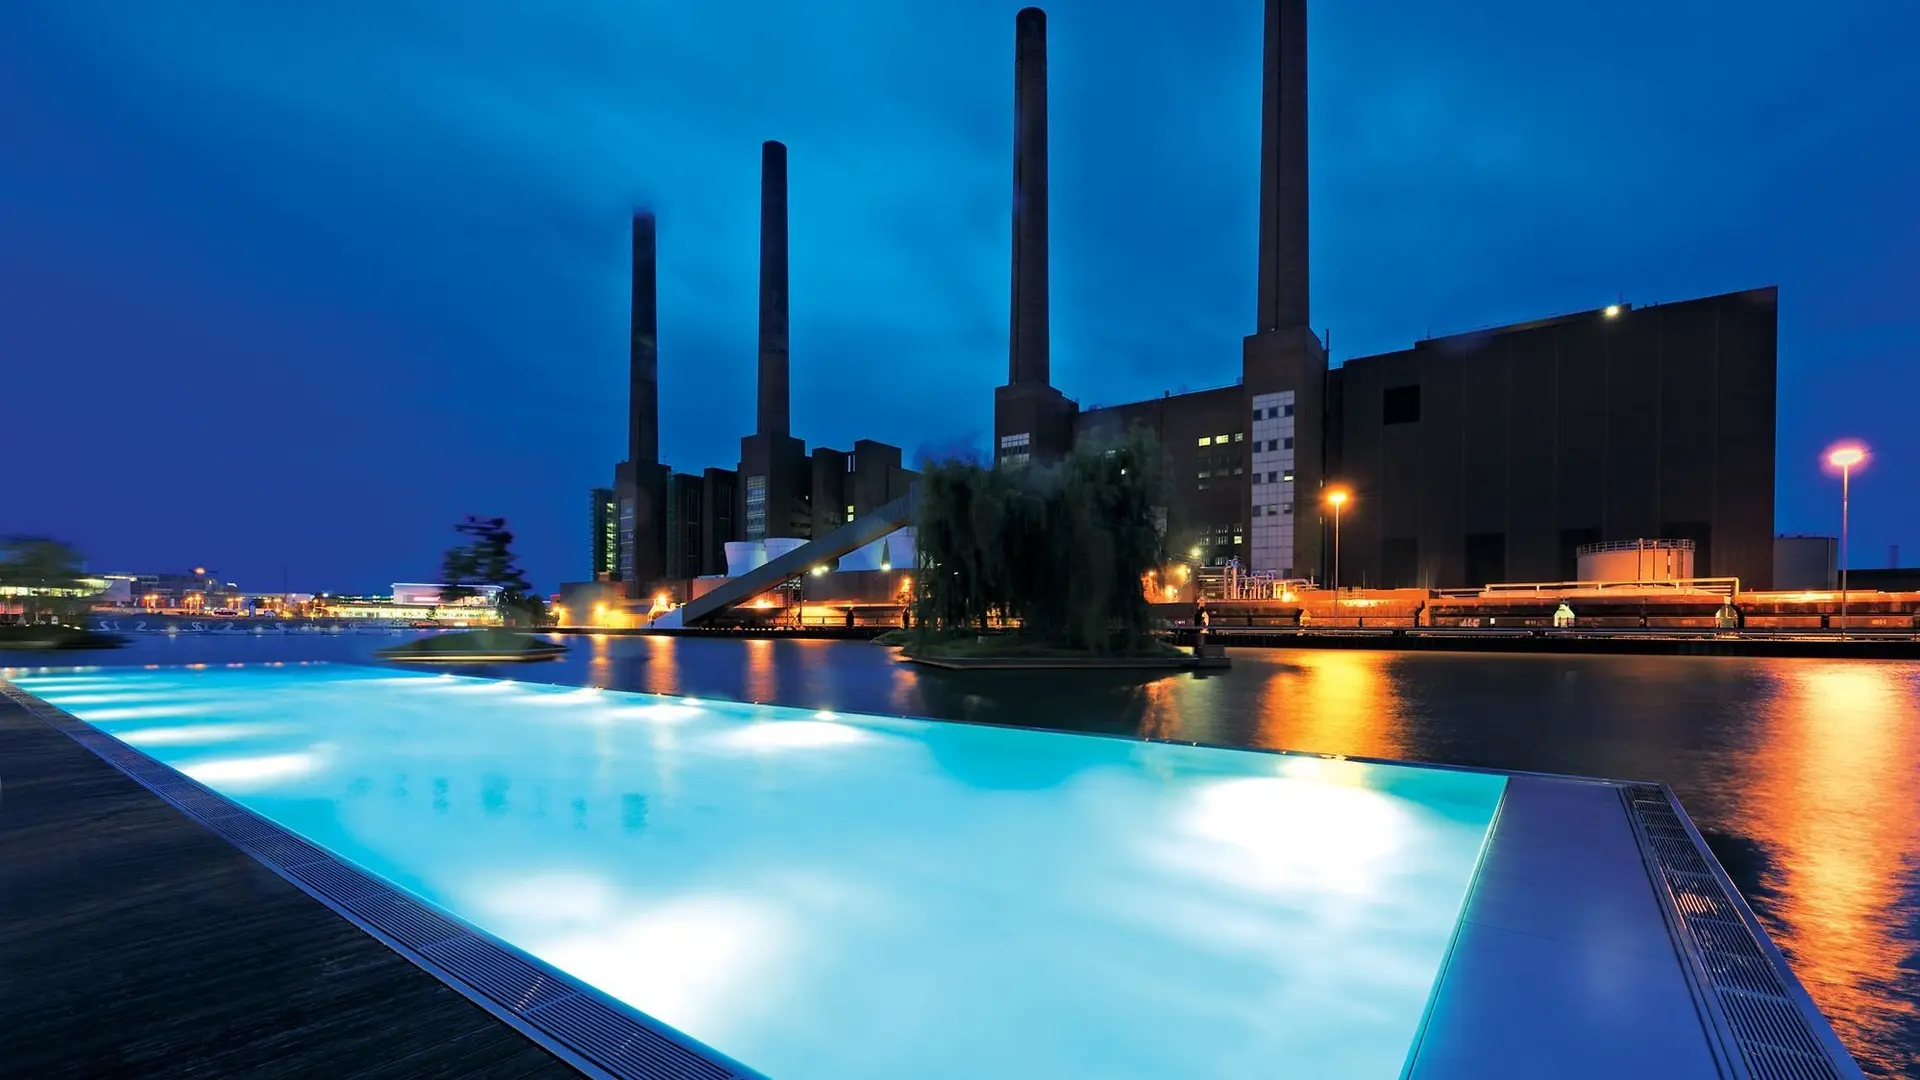 Hotel review Service & Facilities' - The Ritz-Carlton, Wolfsburg - 0